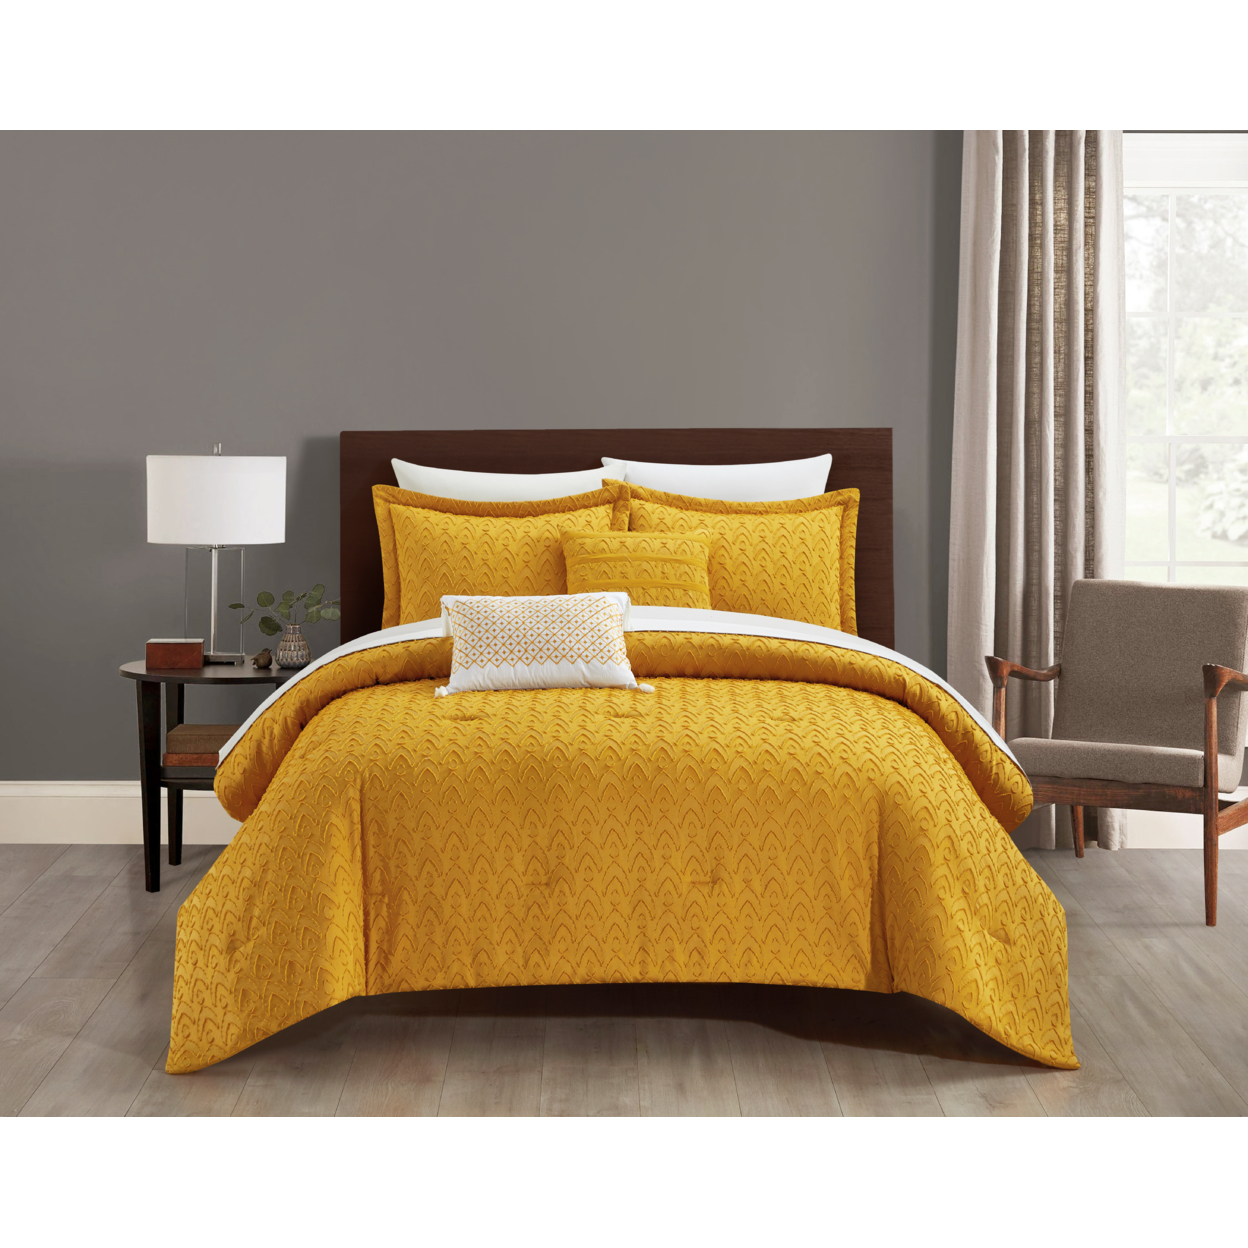 Deign 5 Piece Comforter Set Clip Jacquard Geometric Pattern Design Bedding - Mustard, Queen